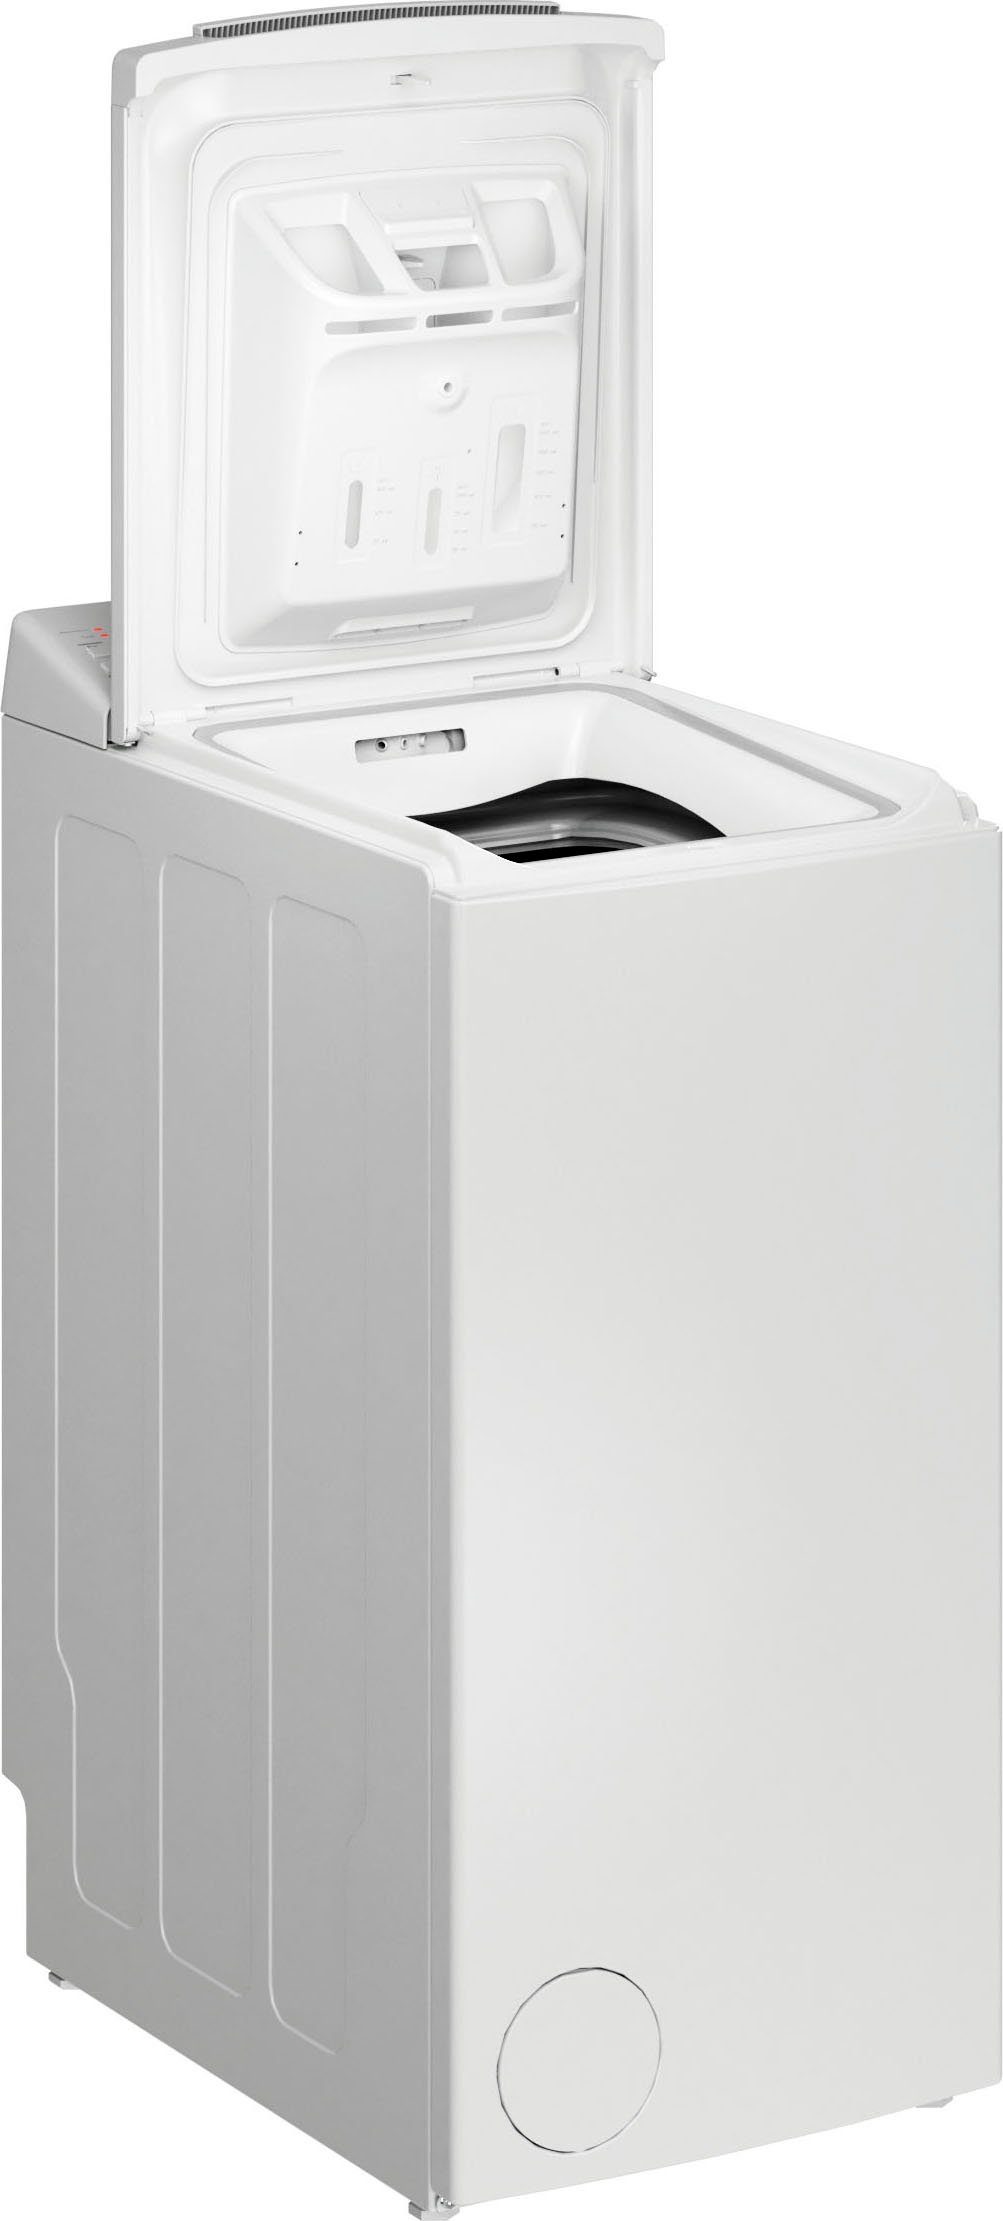 BAUKNECHT Waschmaschine Toplader Eco WAT U/min 6 kg, Smart 12C, 1200